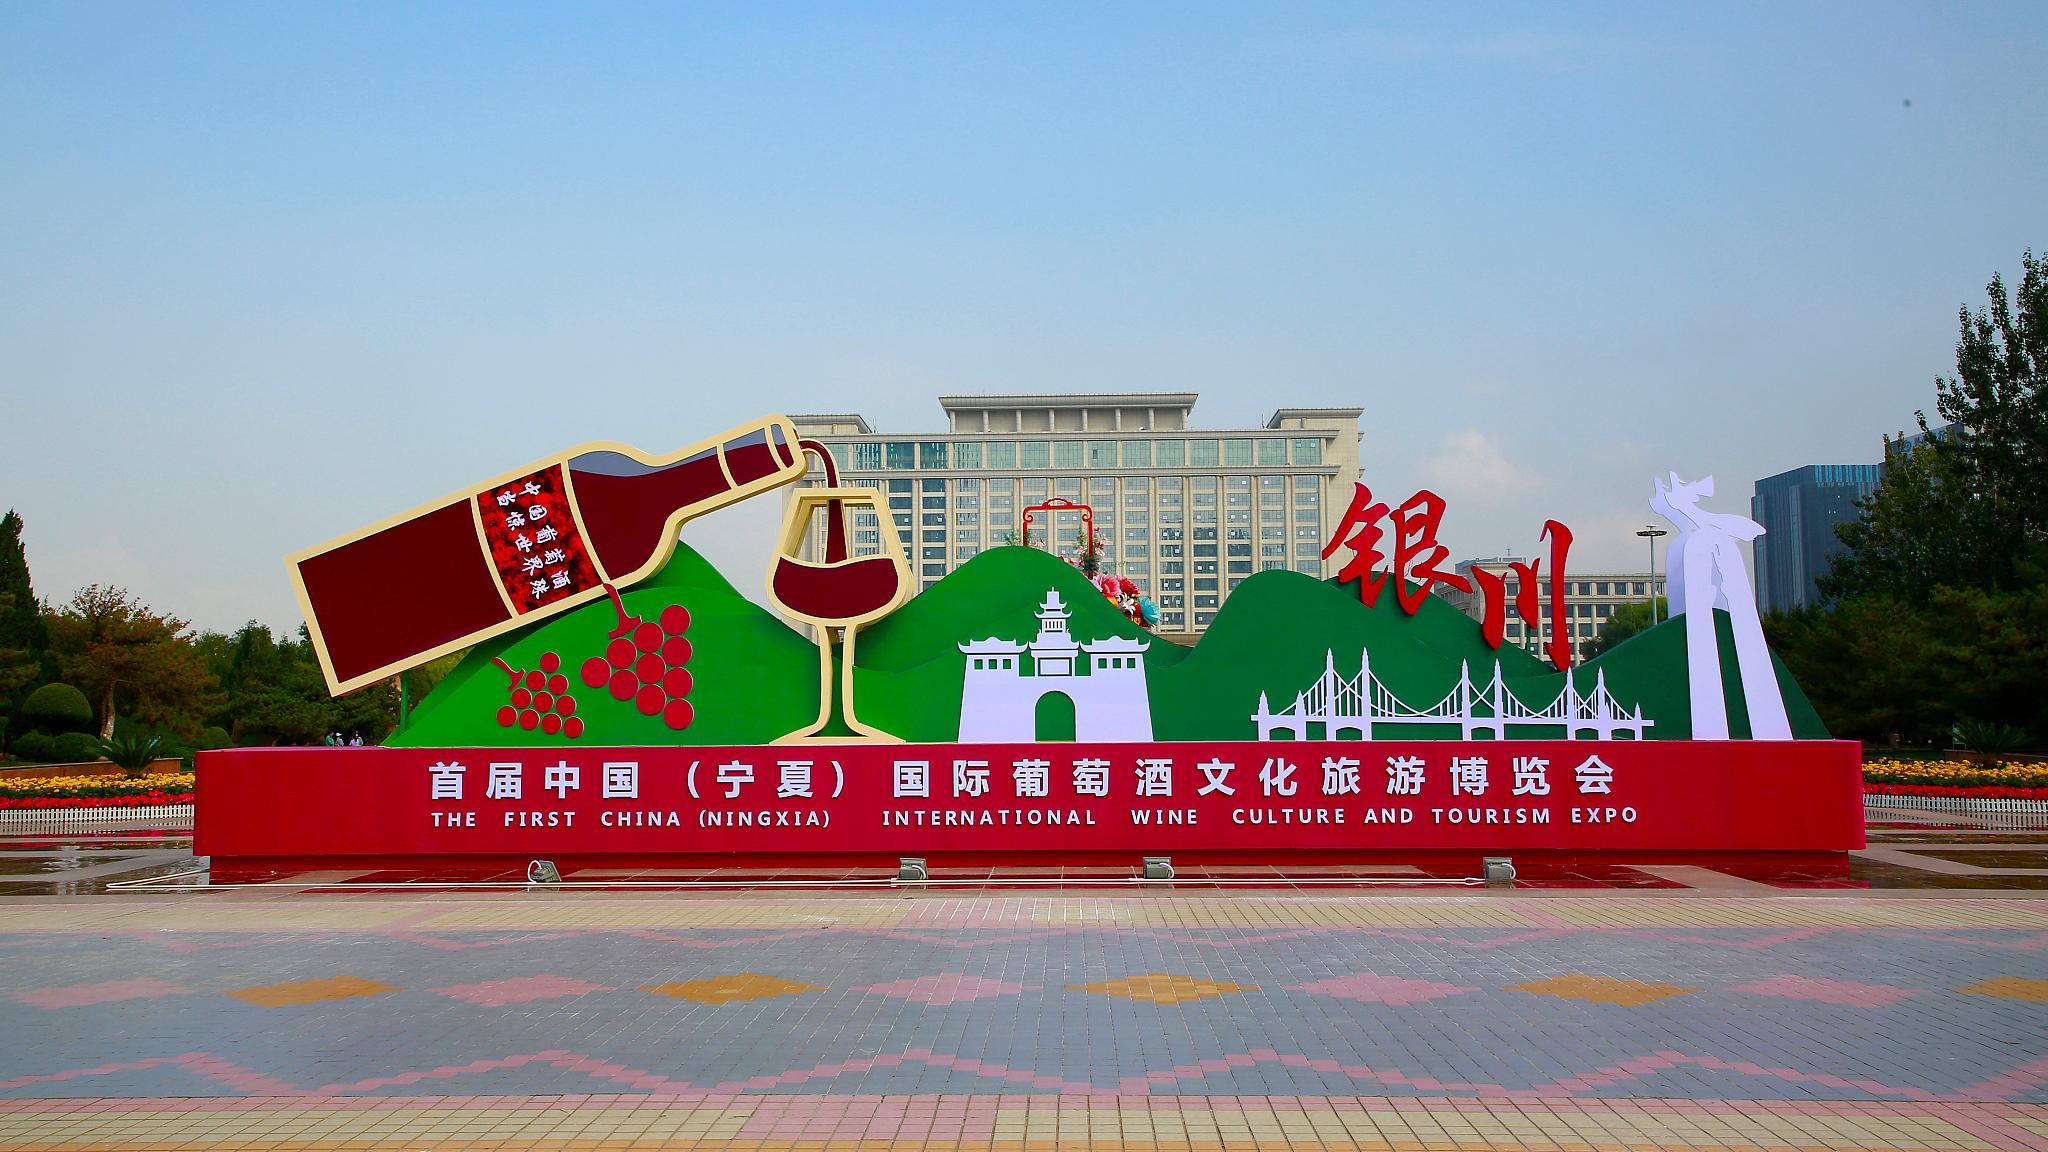 Festival del vino en Ningxia, China